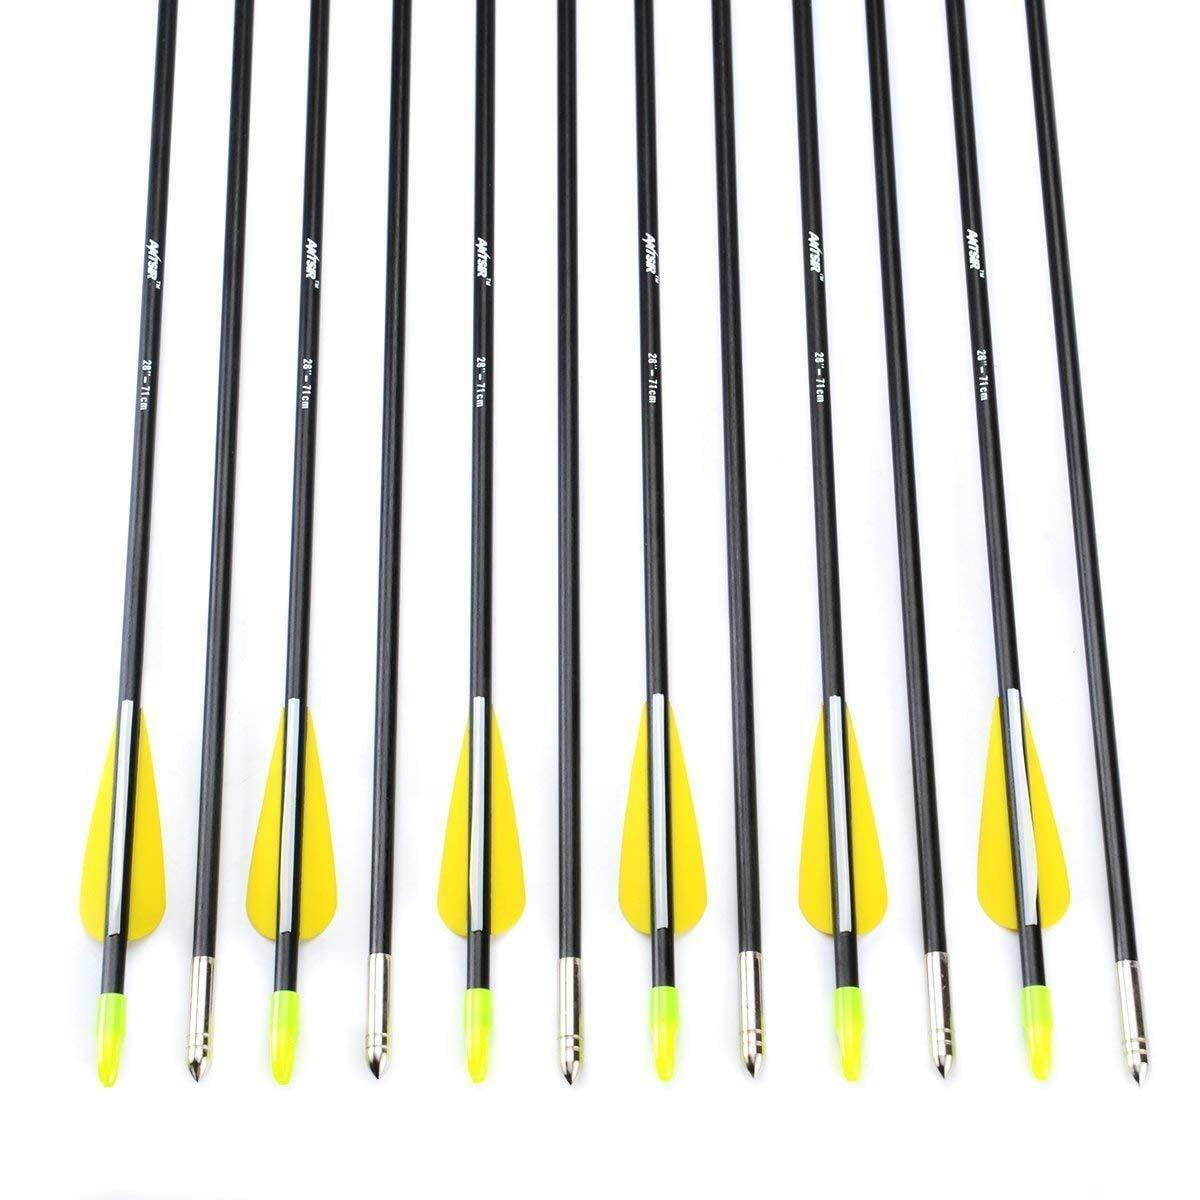 Archery Arrows for compound Bow Fiberglass Target Practice Arrow Sleeve Tips 